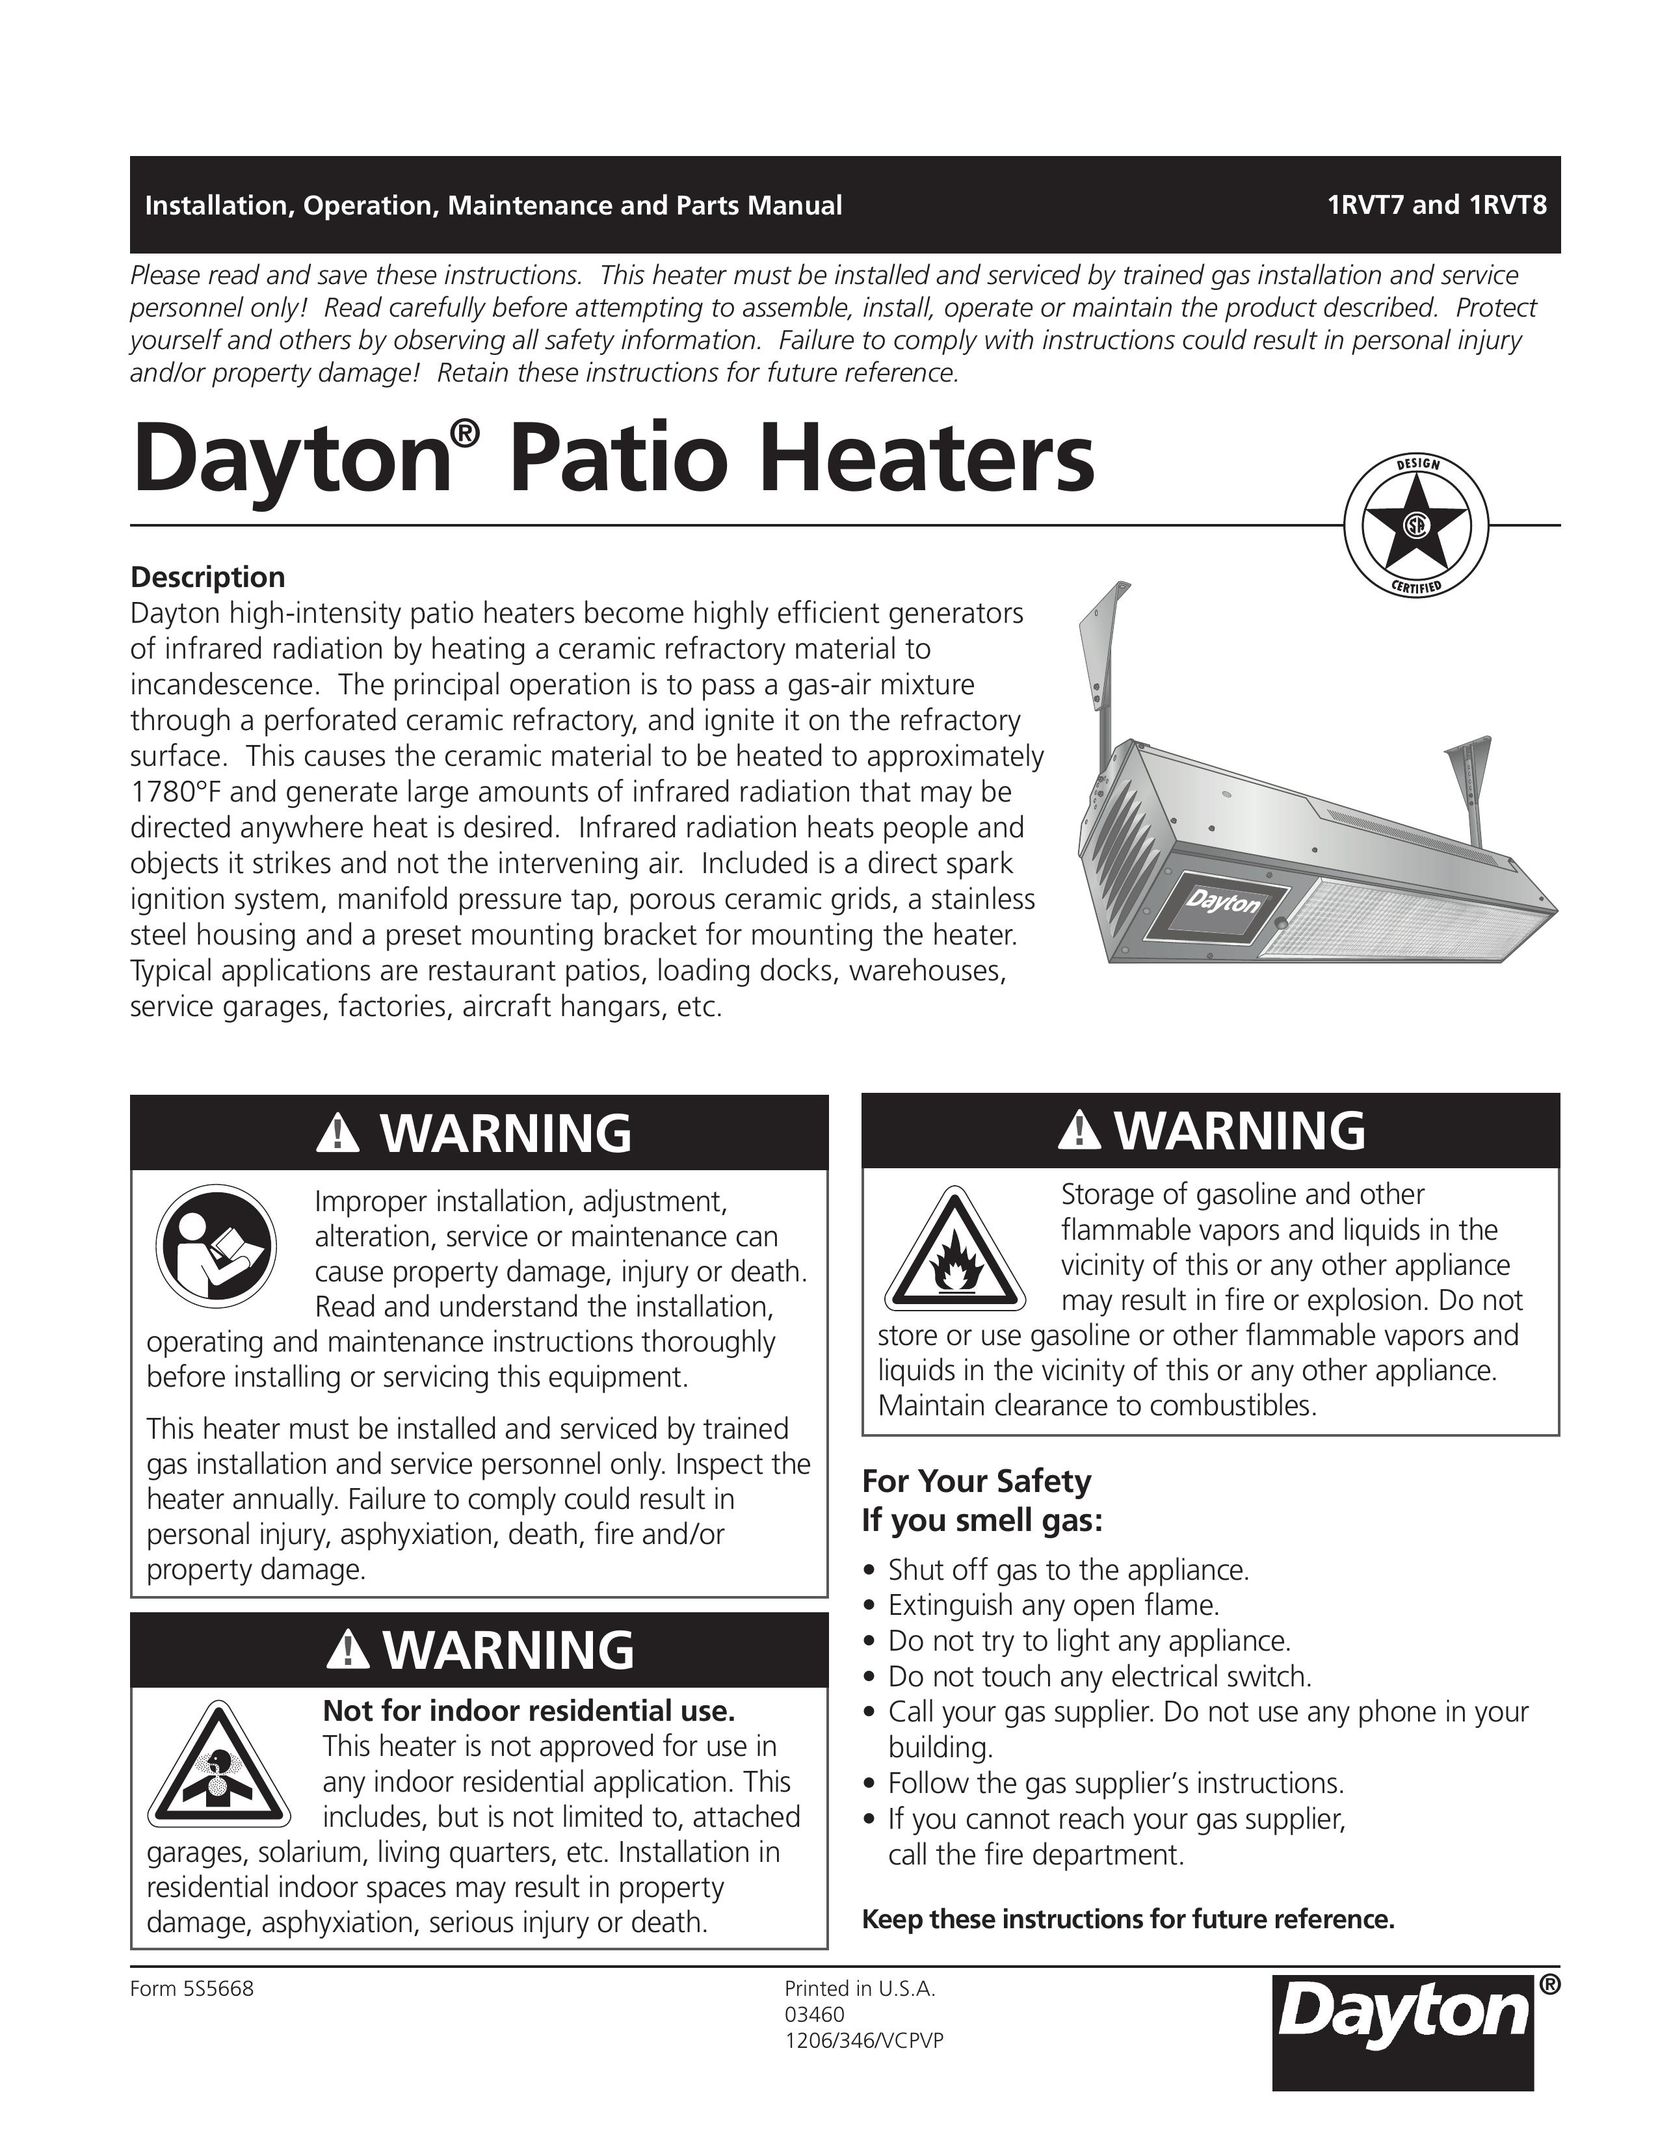 Dayton 1RVT8 Electric Heater User Manual